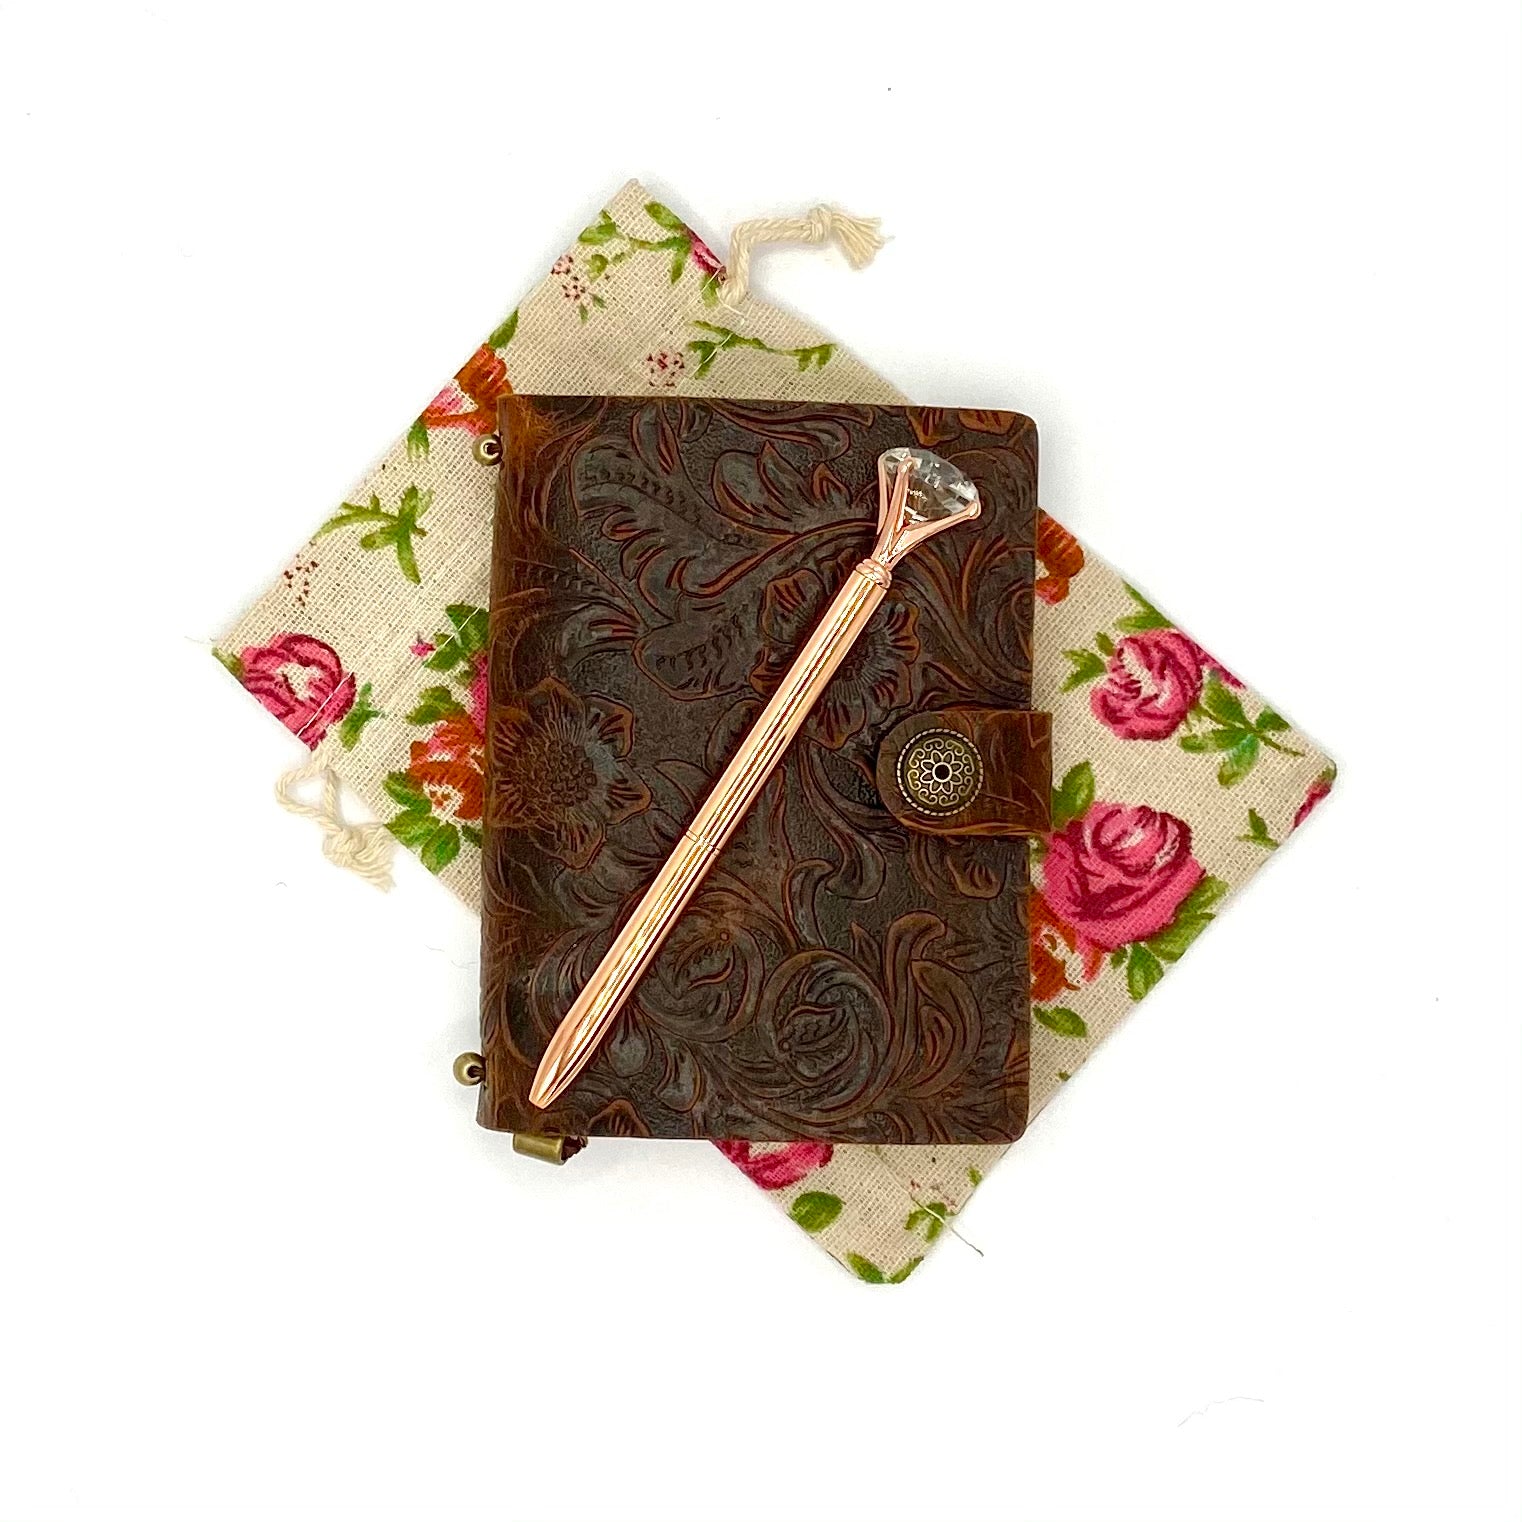 Leather Journal, Rose Gold Pen & Flower Bag